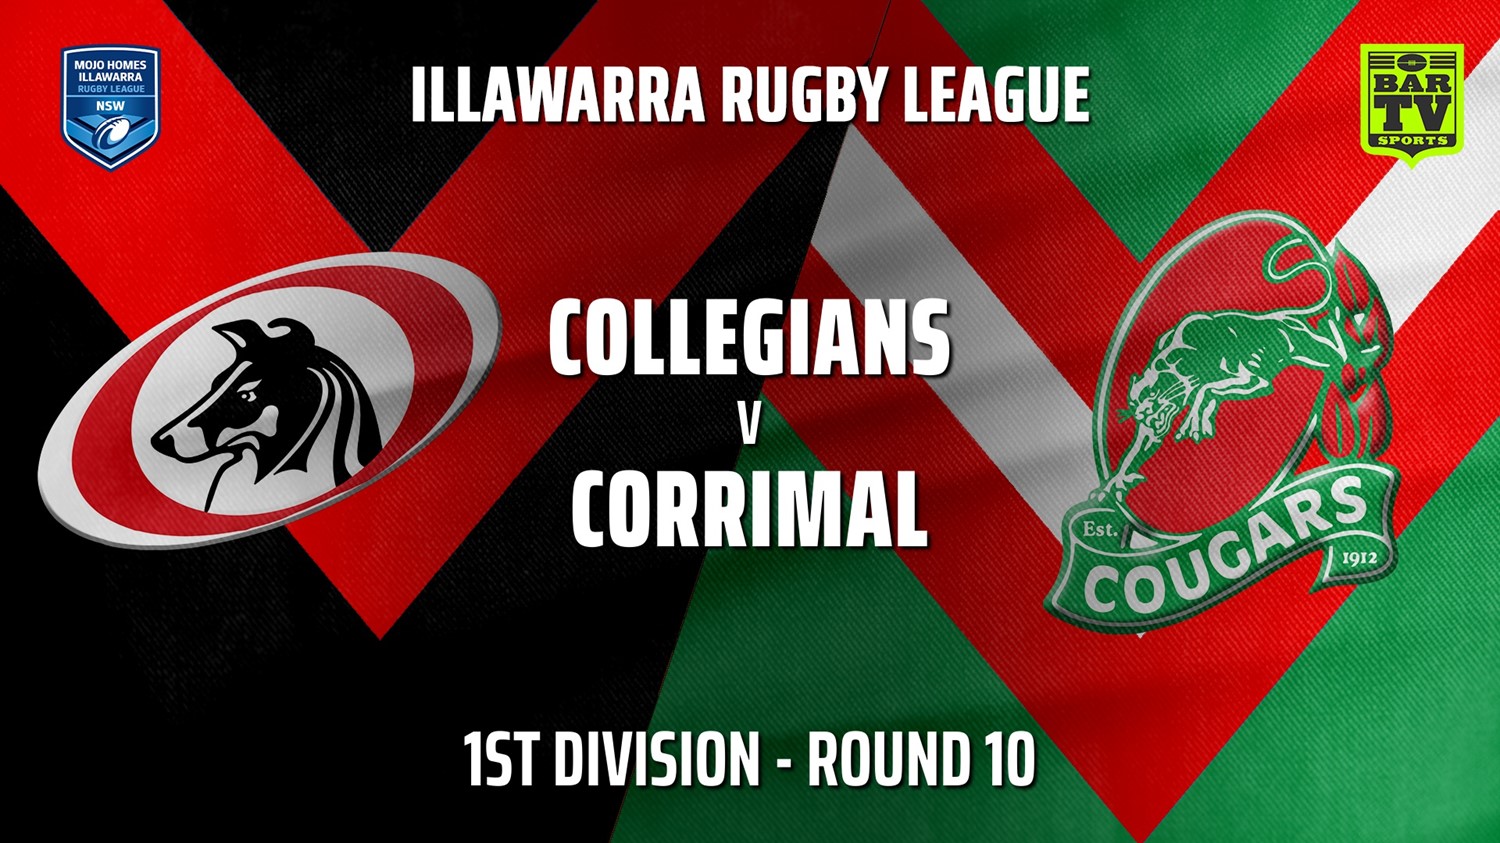 210626-Illawarra Round 10 - 1st Division - Collegians v Corrimal Cougars Slate Image